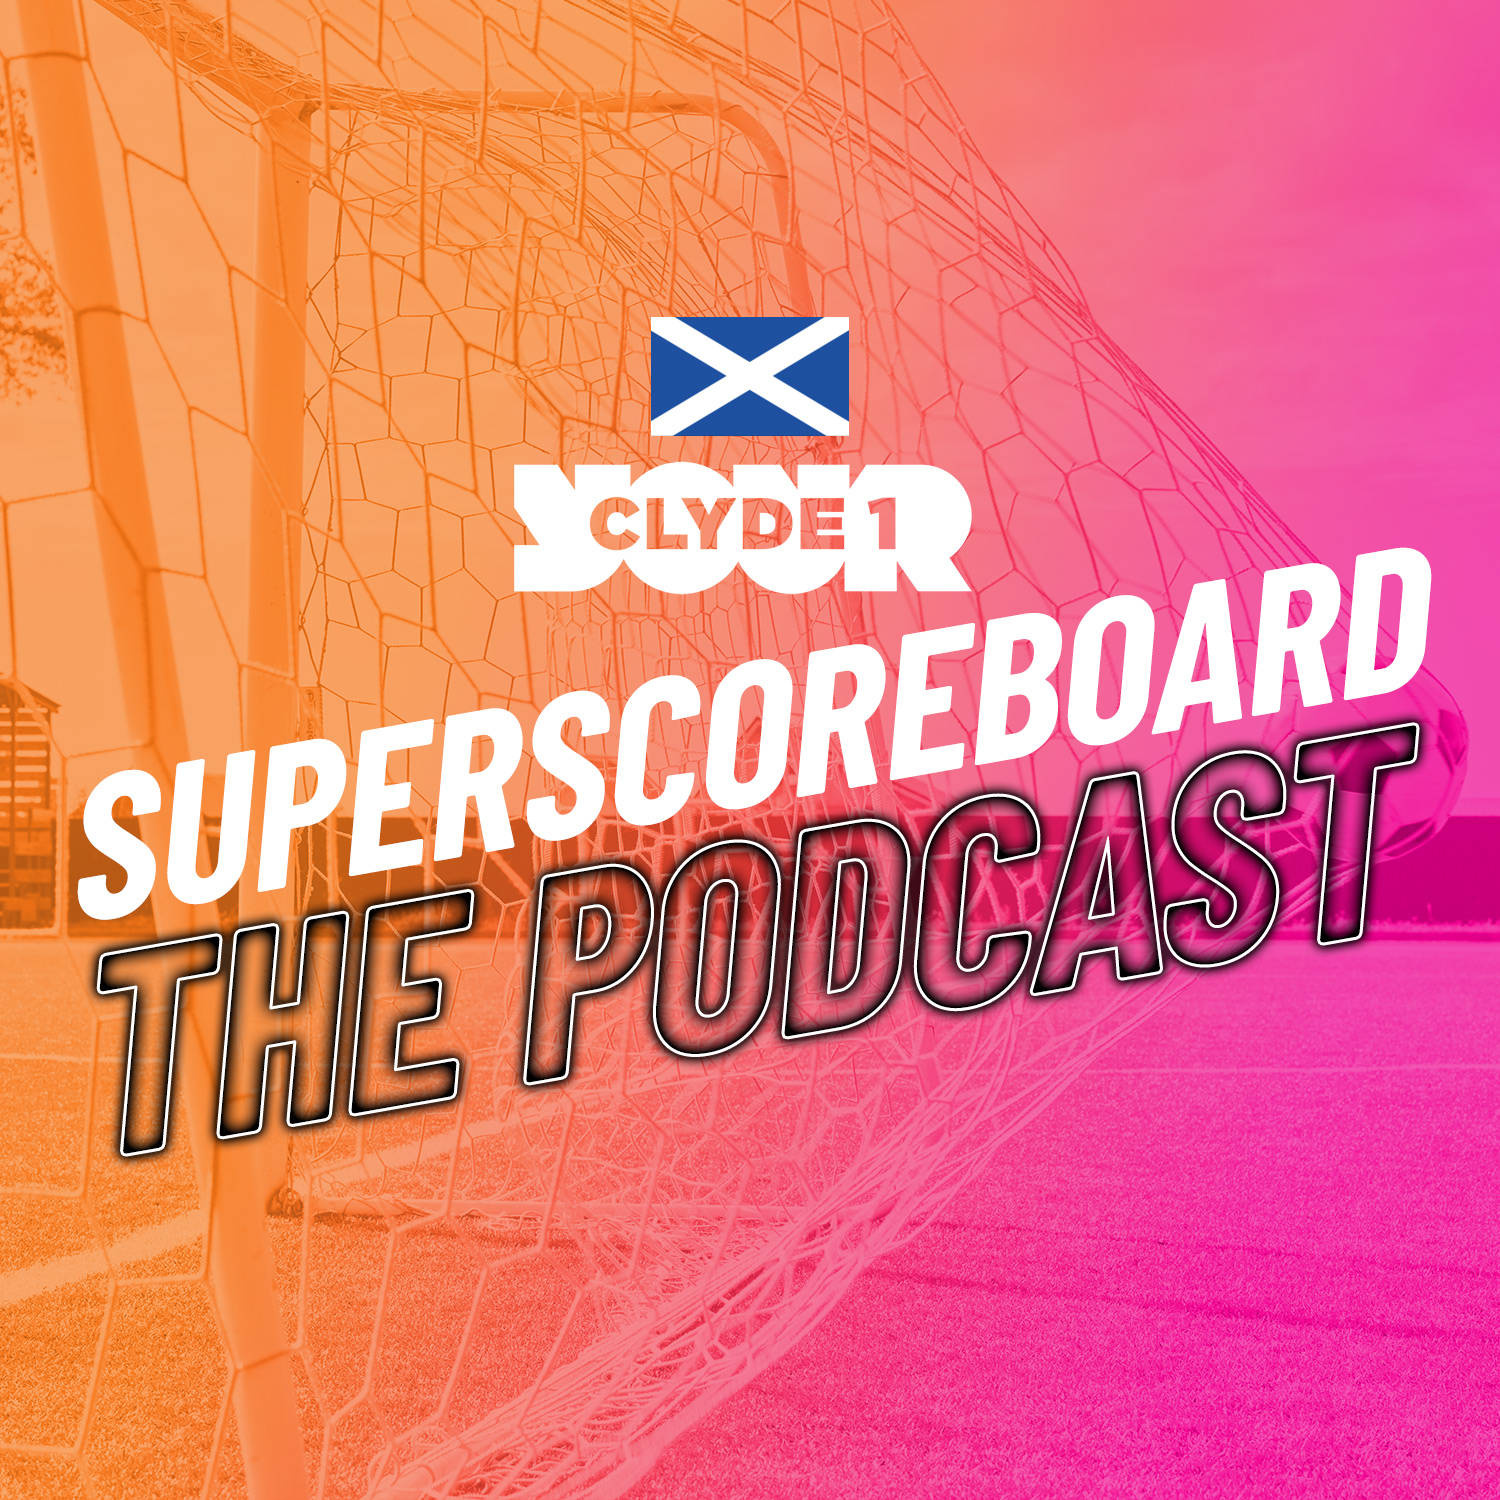 Saturday 30th December Clyde 1 Superscoreboard Part 2